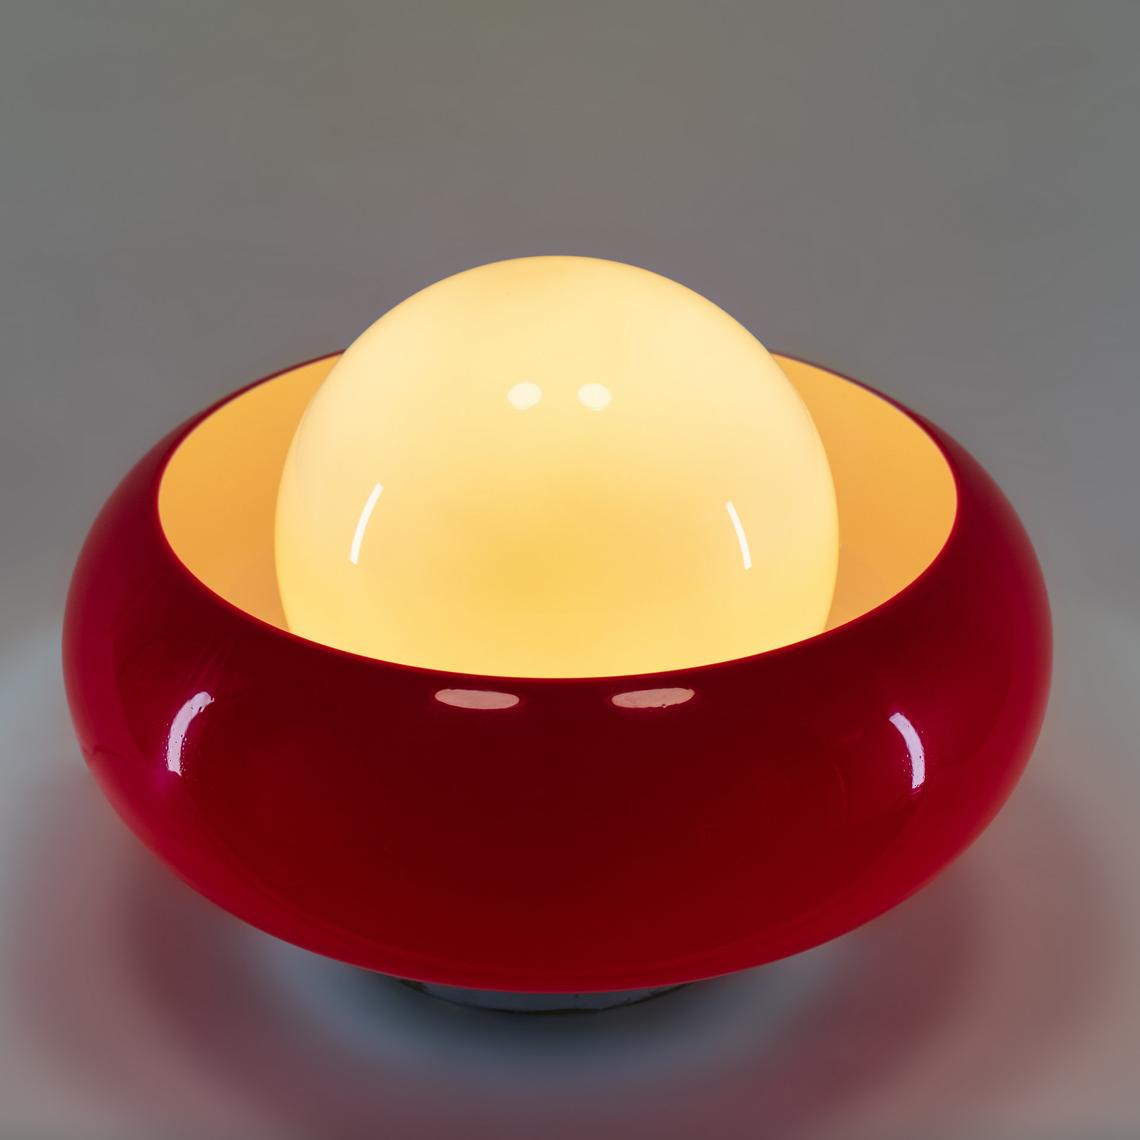 https://www.retro-taste.com/wp-content/uploads/2021/05/1-Harvey-Guzzini-Red-Wall-Lamp-Space-Age-Ceiling-Light-Italian-Design-70s.jpg